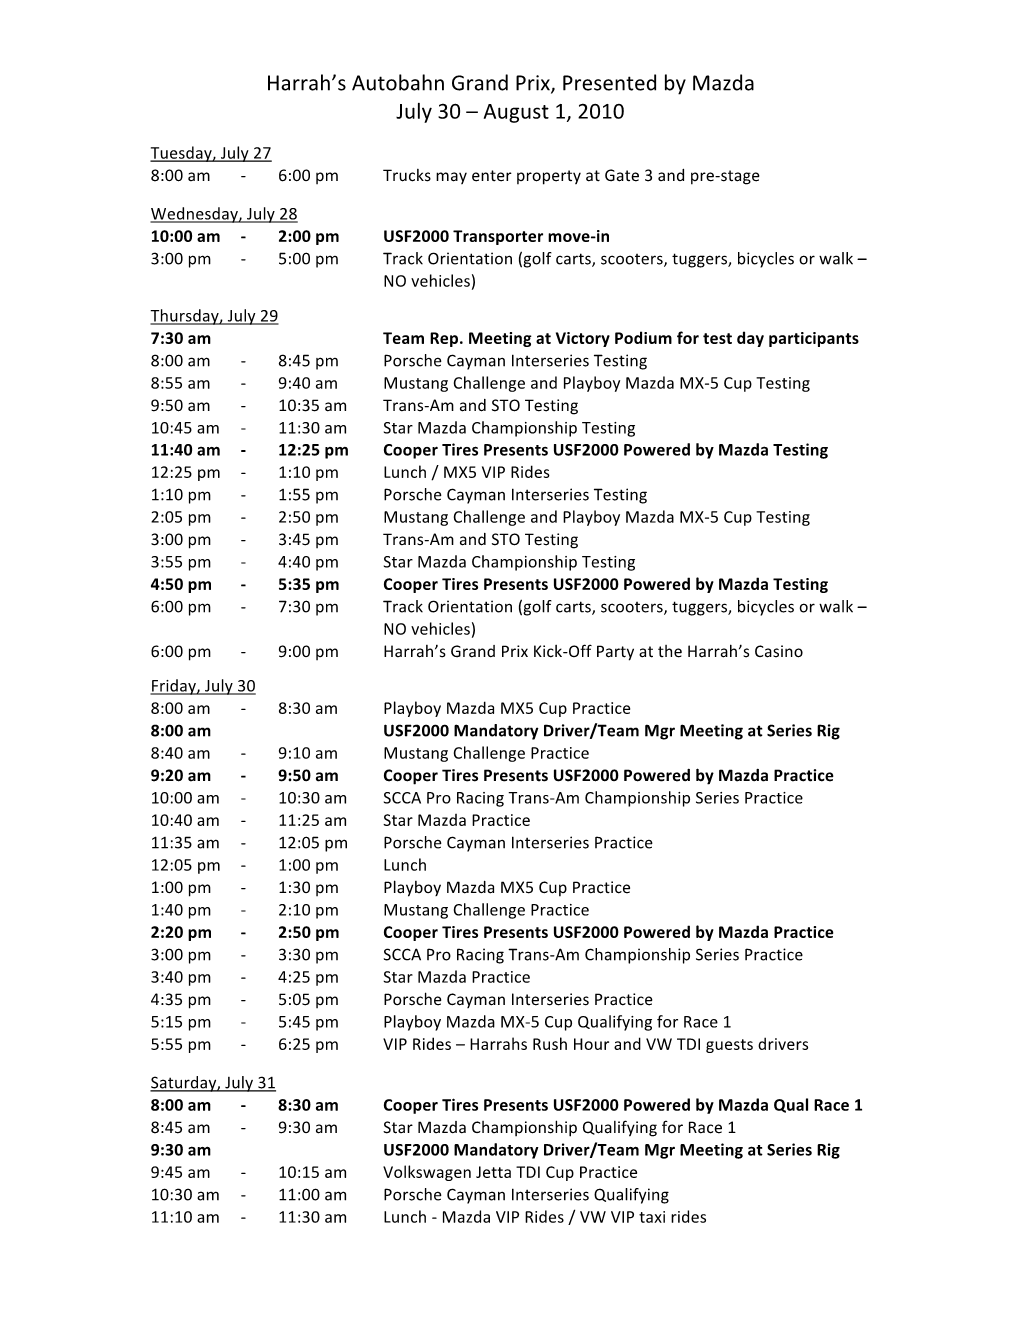 USF2000 Event Schedule